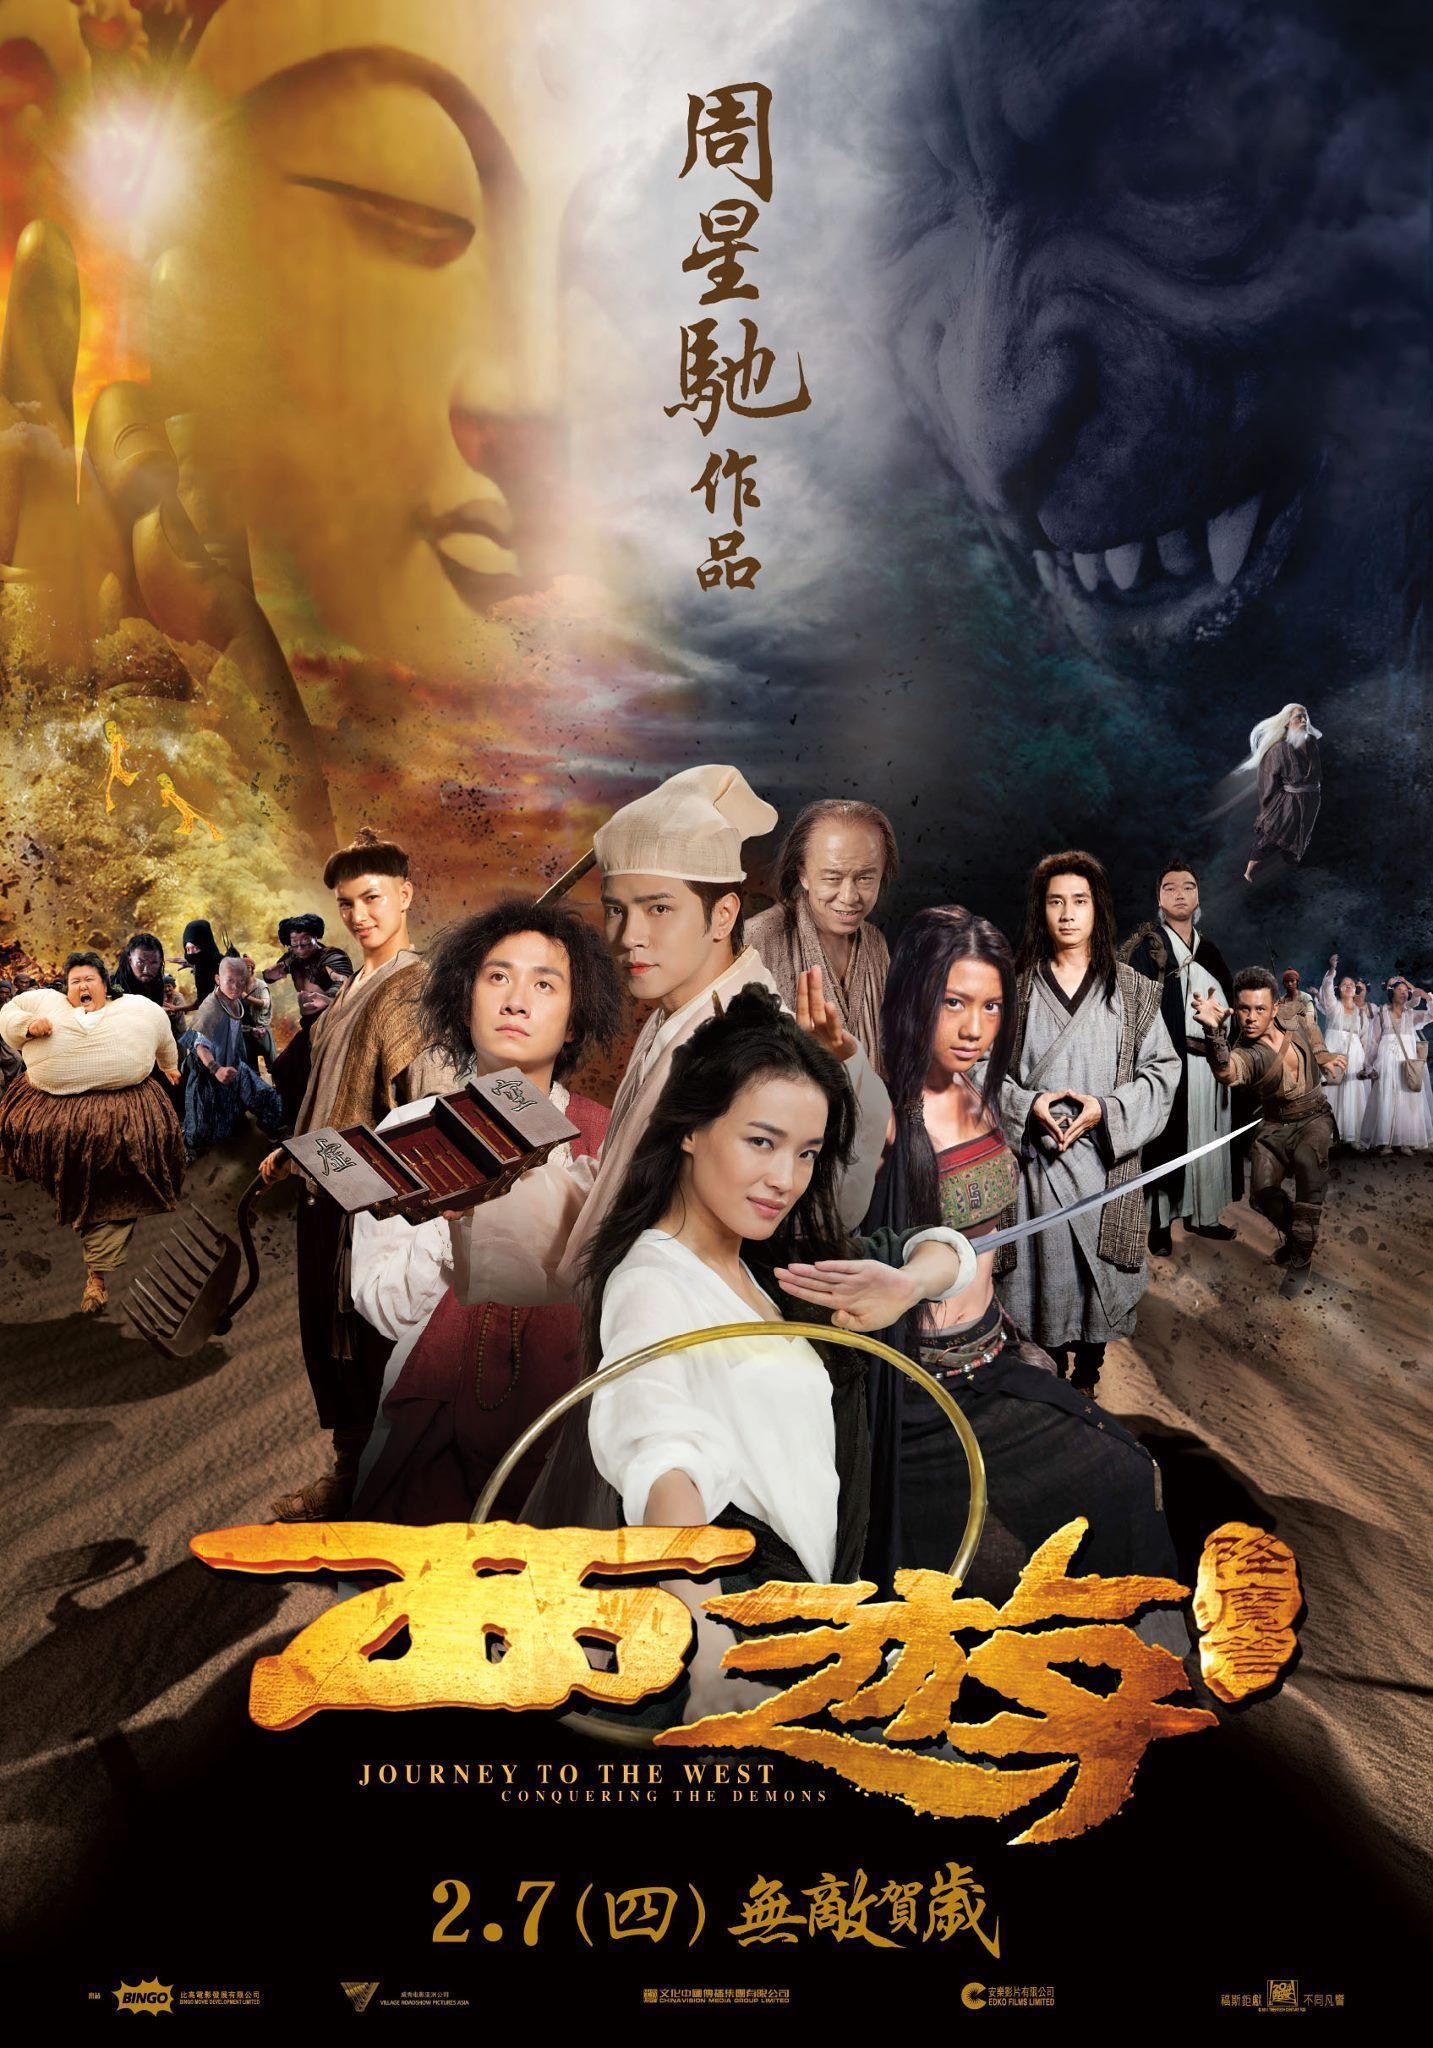 Mega Sized Movie Poster Image for Xi you xiang mo pian (#1 of 2)